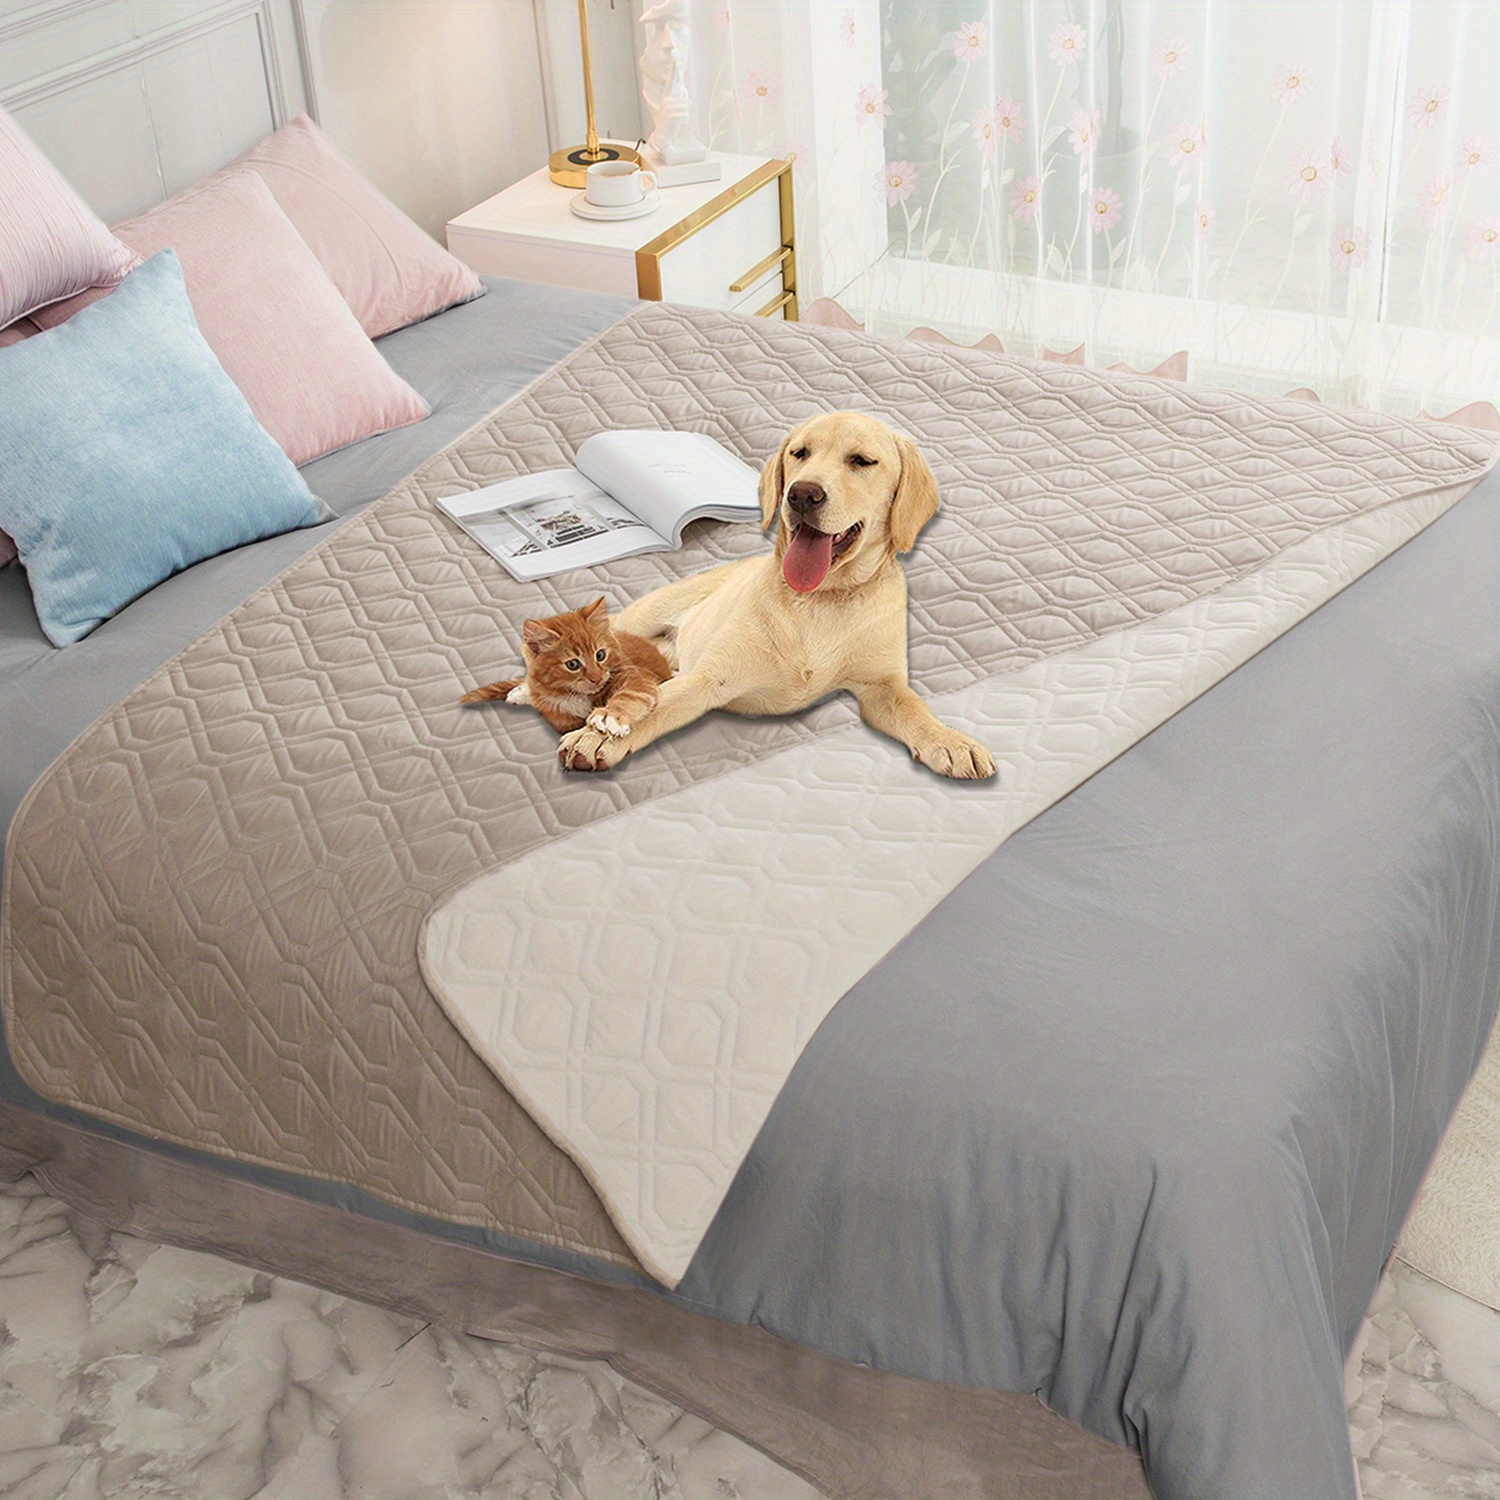  PetAmi - Manta impermeable para perro, sofá, manta de sherpa  roja impermeable para perros grandes, cachorros, forro polar de microfibra  supersuave lavable, diseño reversible, 60 x 40 (borgoña) : Productos para  Animales